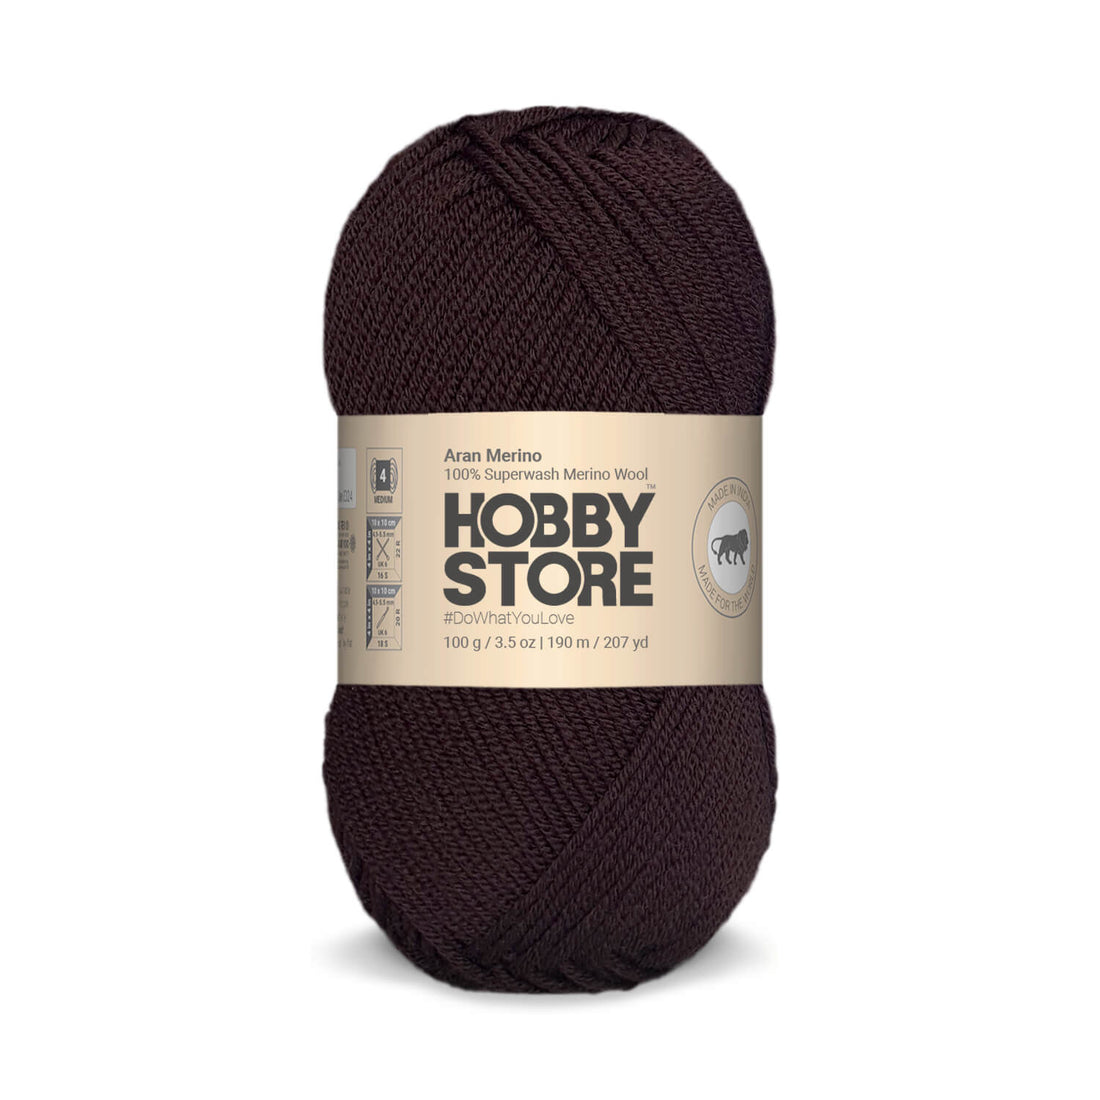 Aran Merino Wool by Hobby Store - Dark Brown AM013